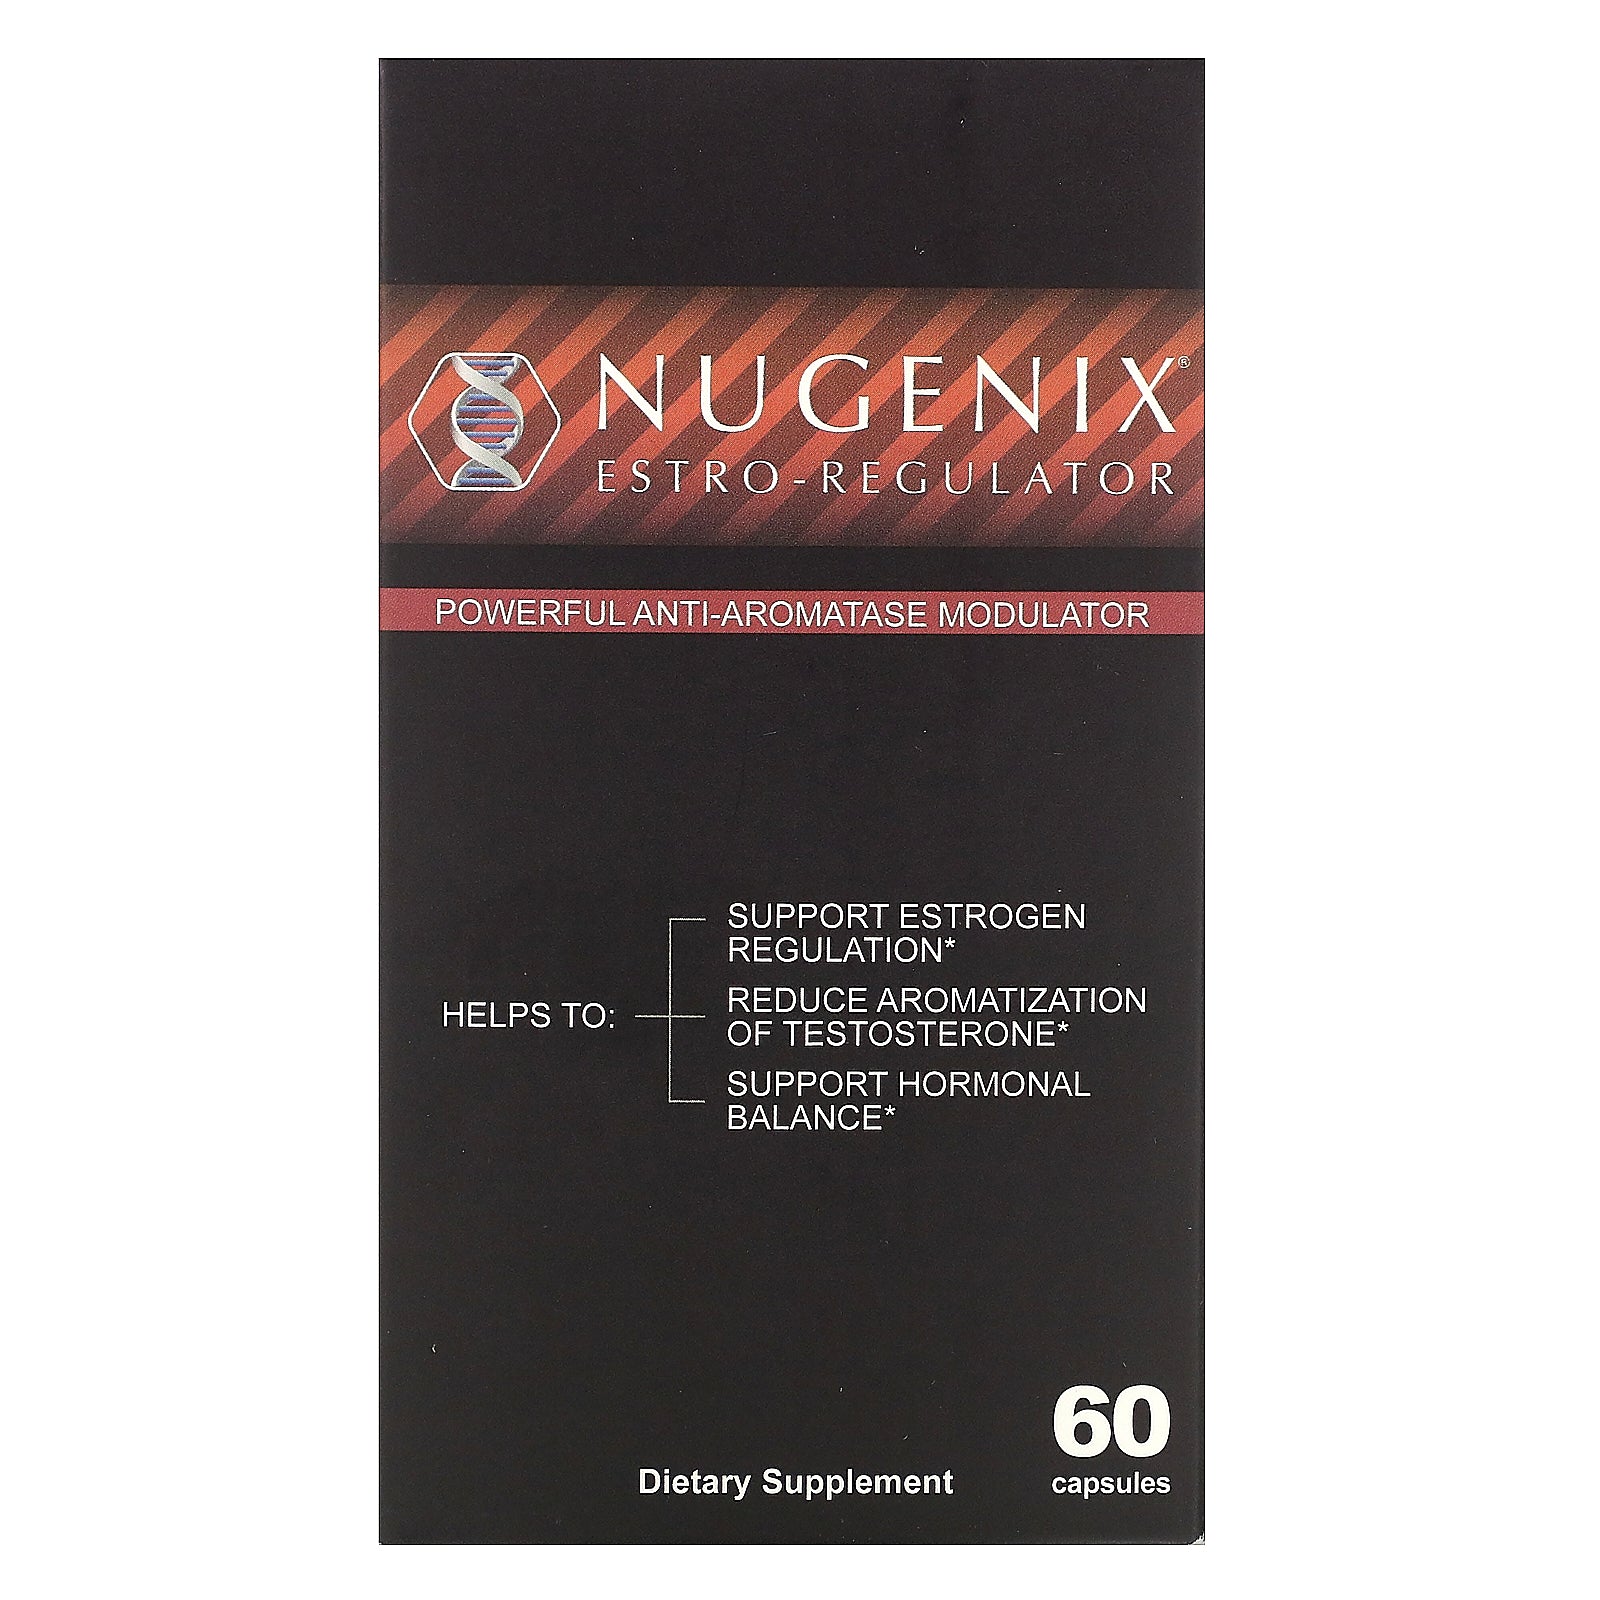 Nugenix, Estro-Regulator, Powerful Anti-Aromatase Modulator